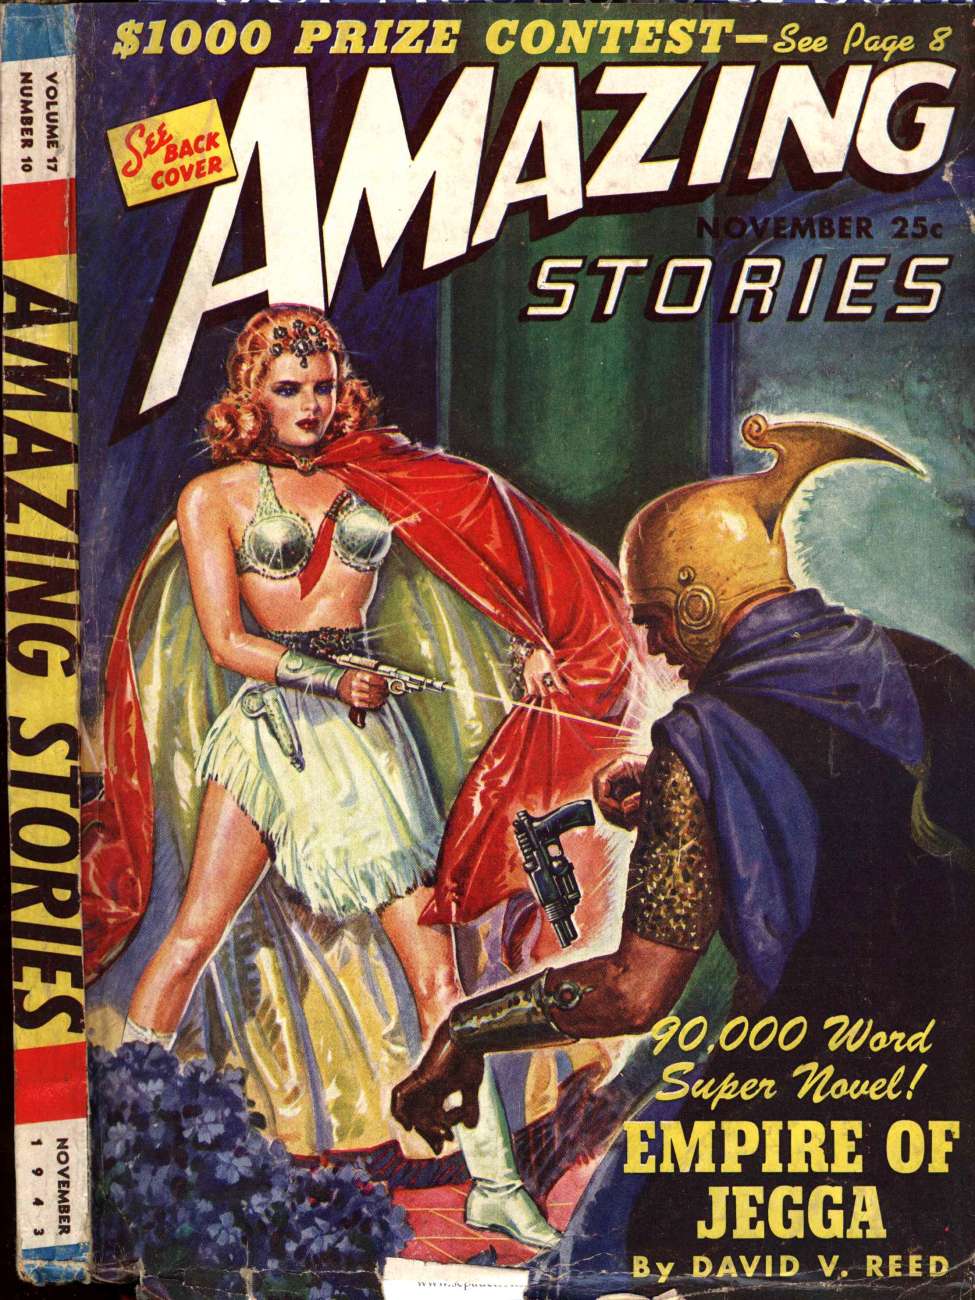 Comic Book Cover For Amazing Stories v17 10 - Empire of Jegga - David V. Reed